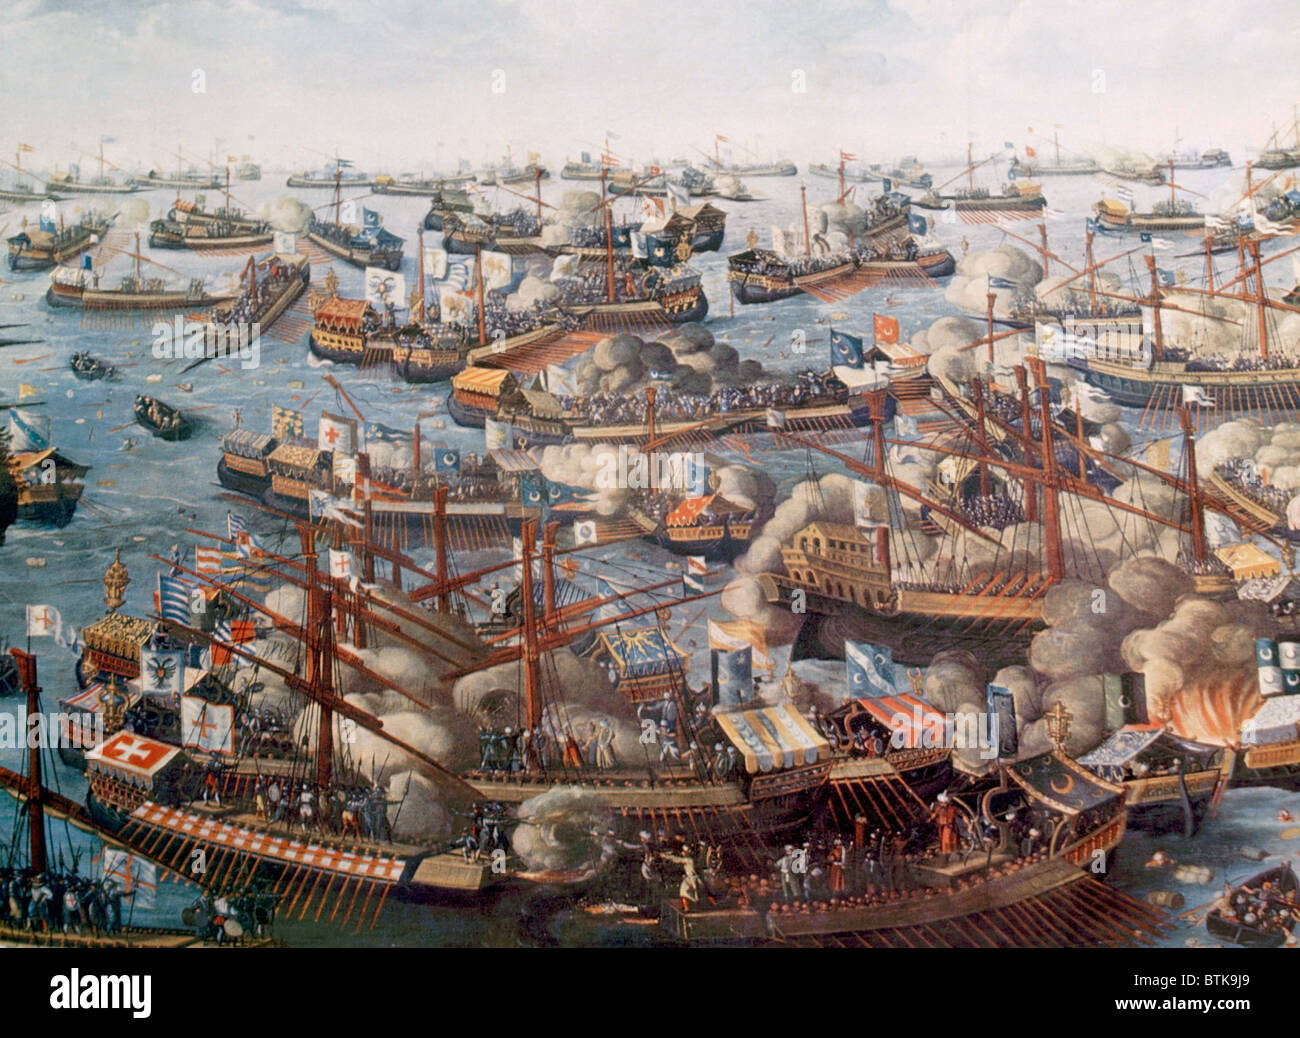 The Battle of Lepanto, the fleet of the Holy League destroys the Turkish fleet near Greece, October 7, 1571 Stock Photo